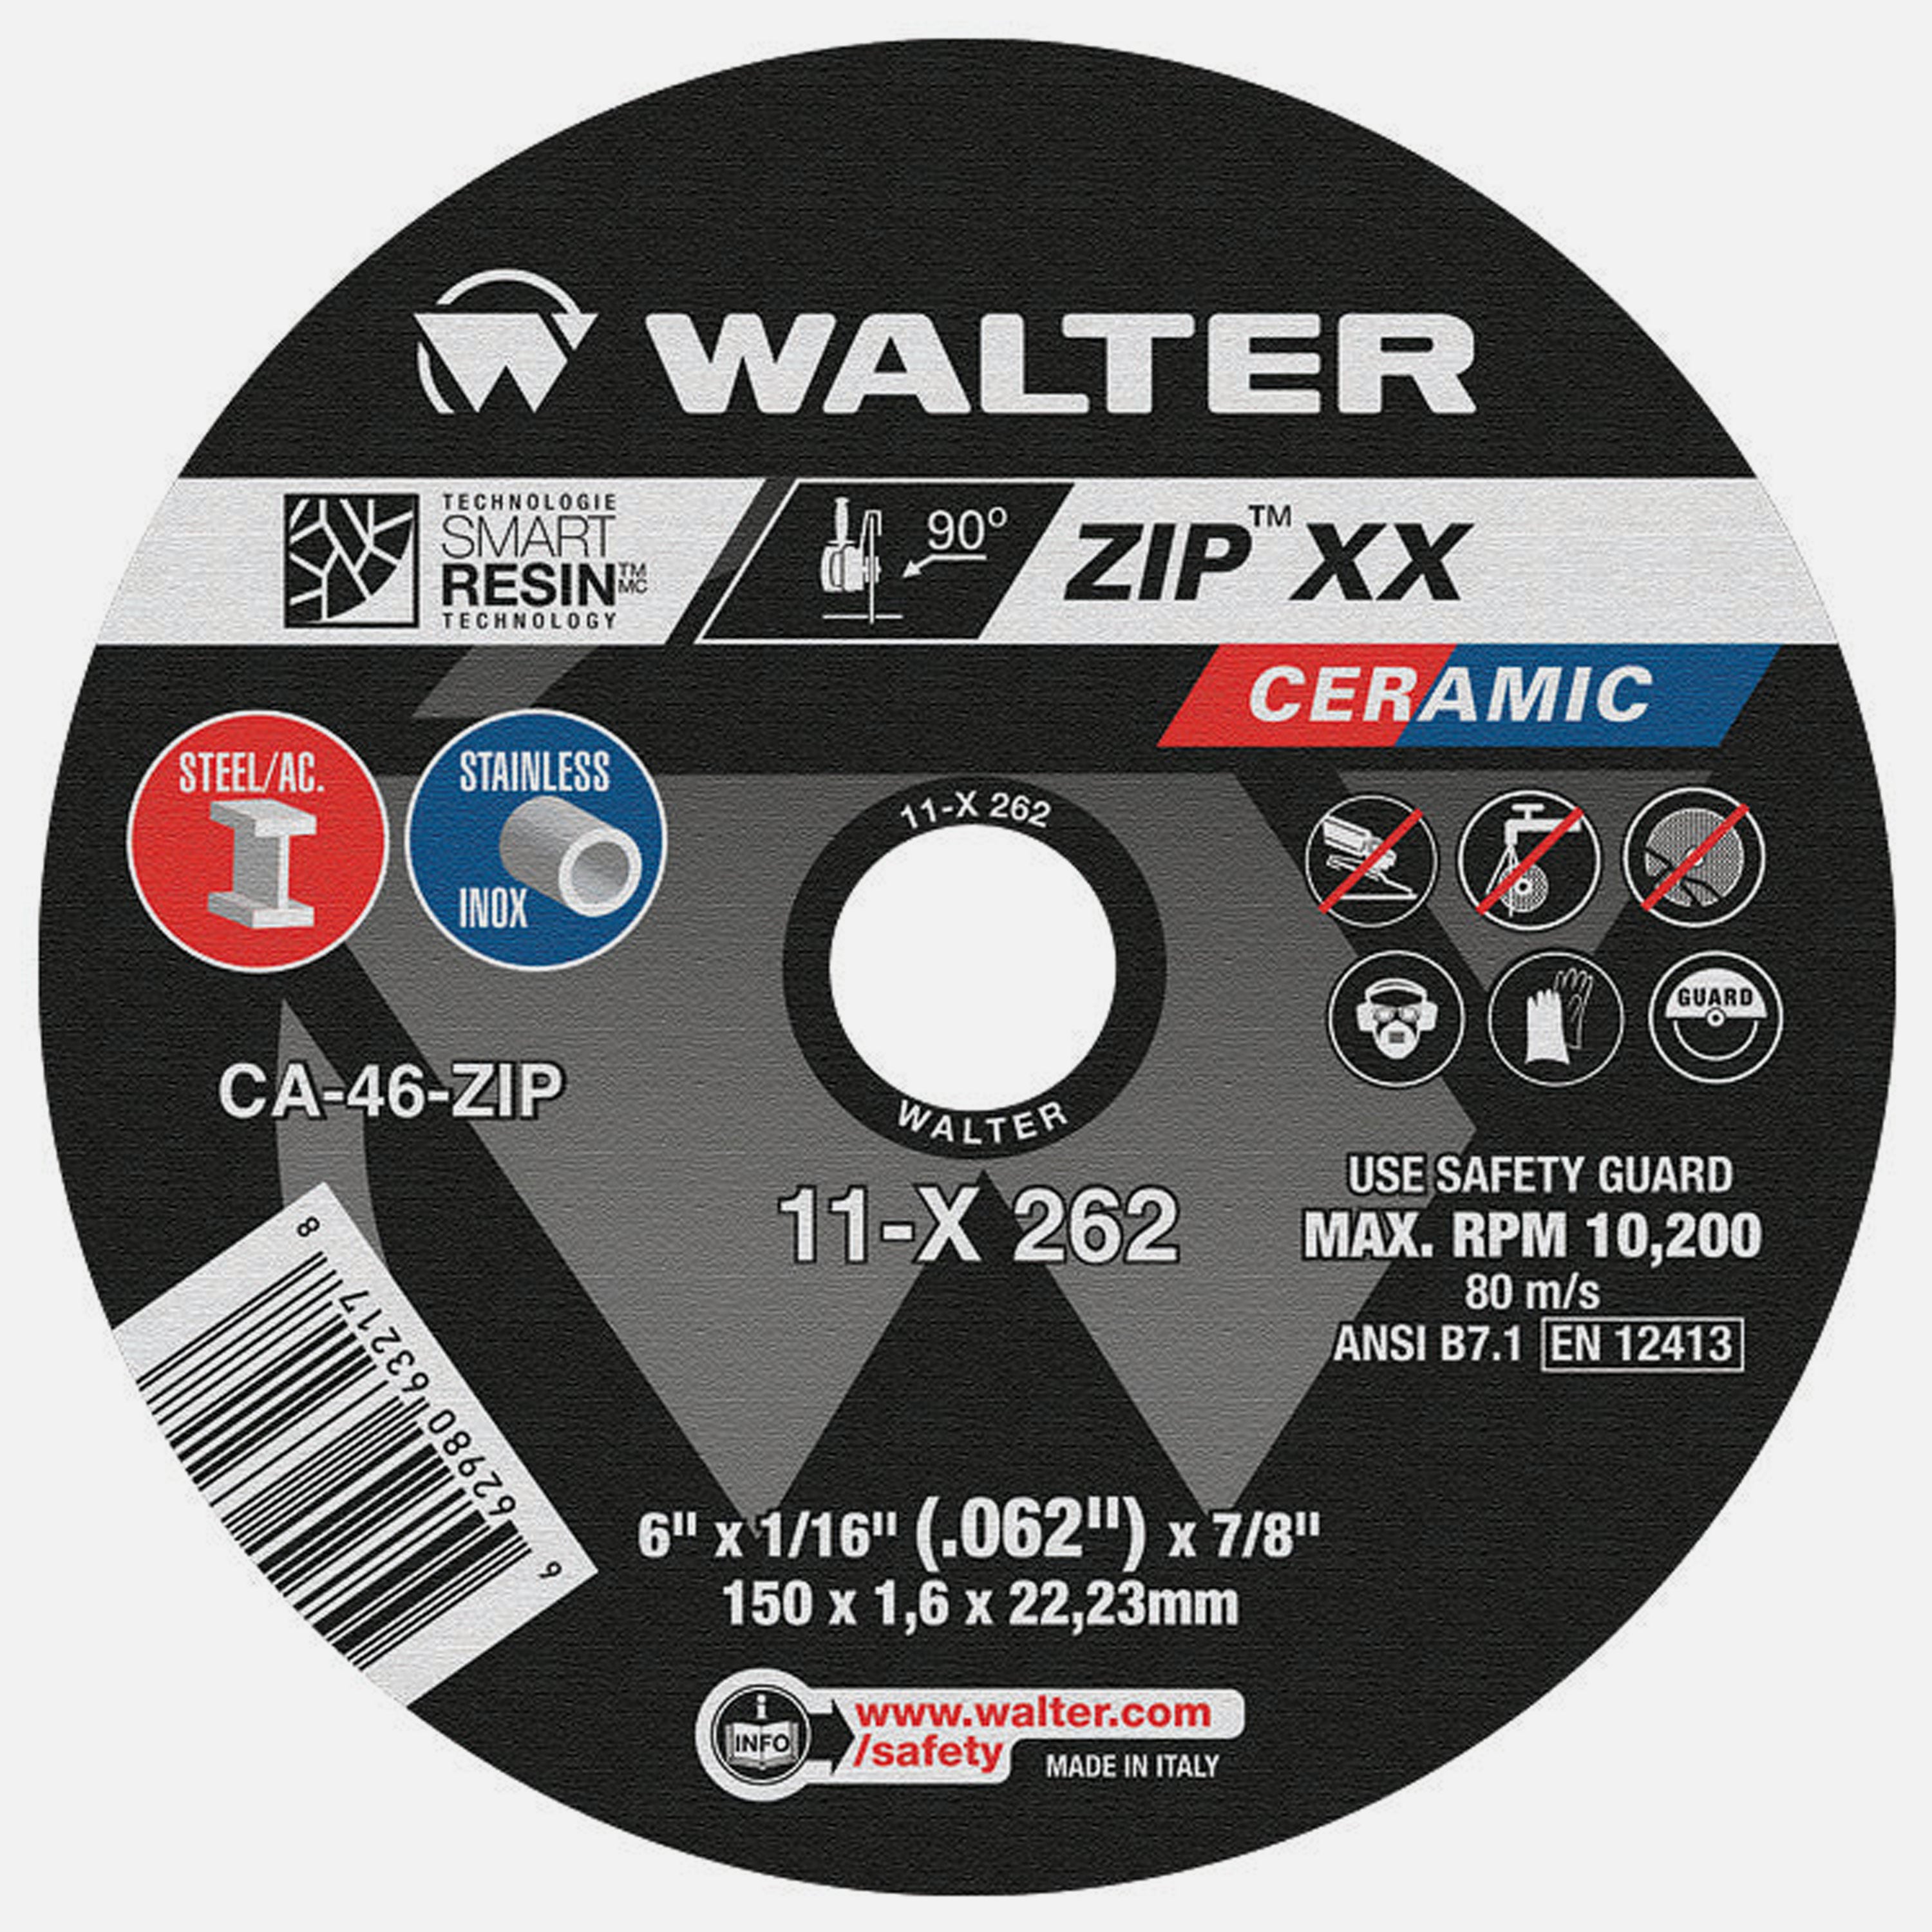 Walter Zip XX Ceramic Cut Off Wheels (5 Pack)